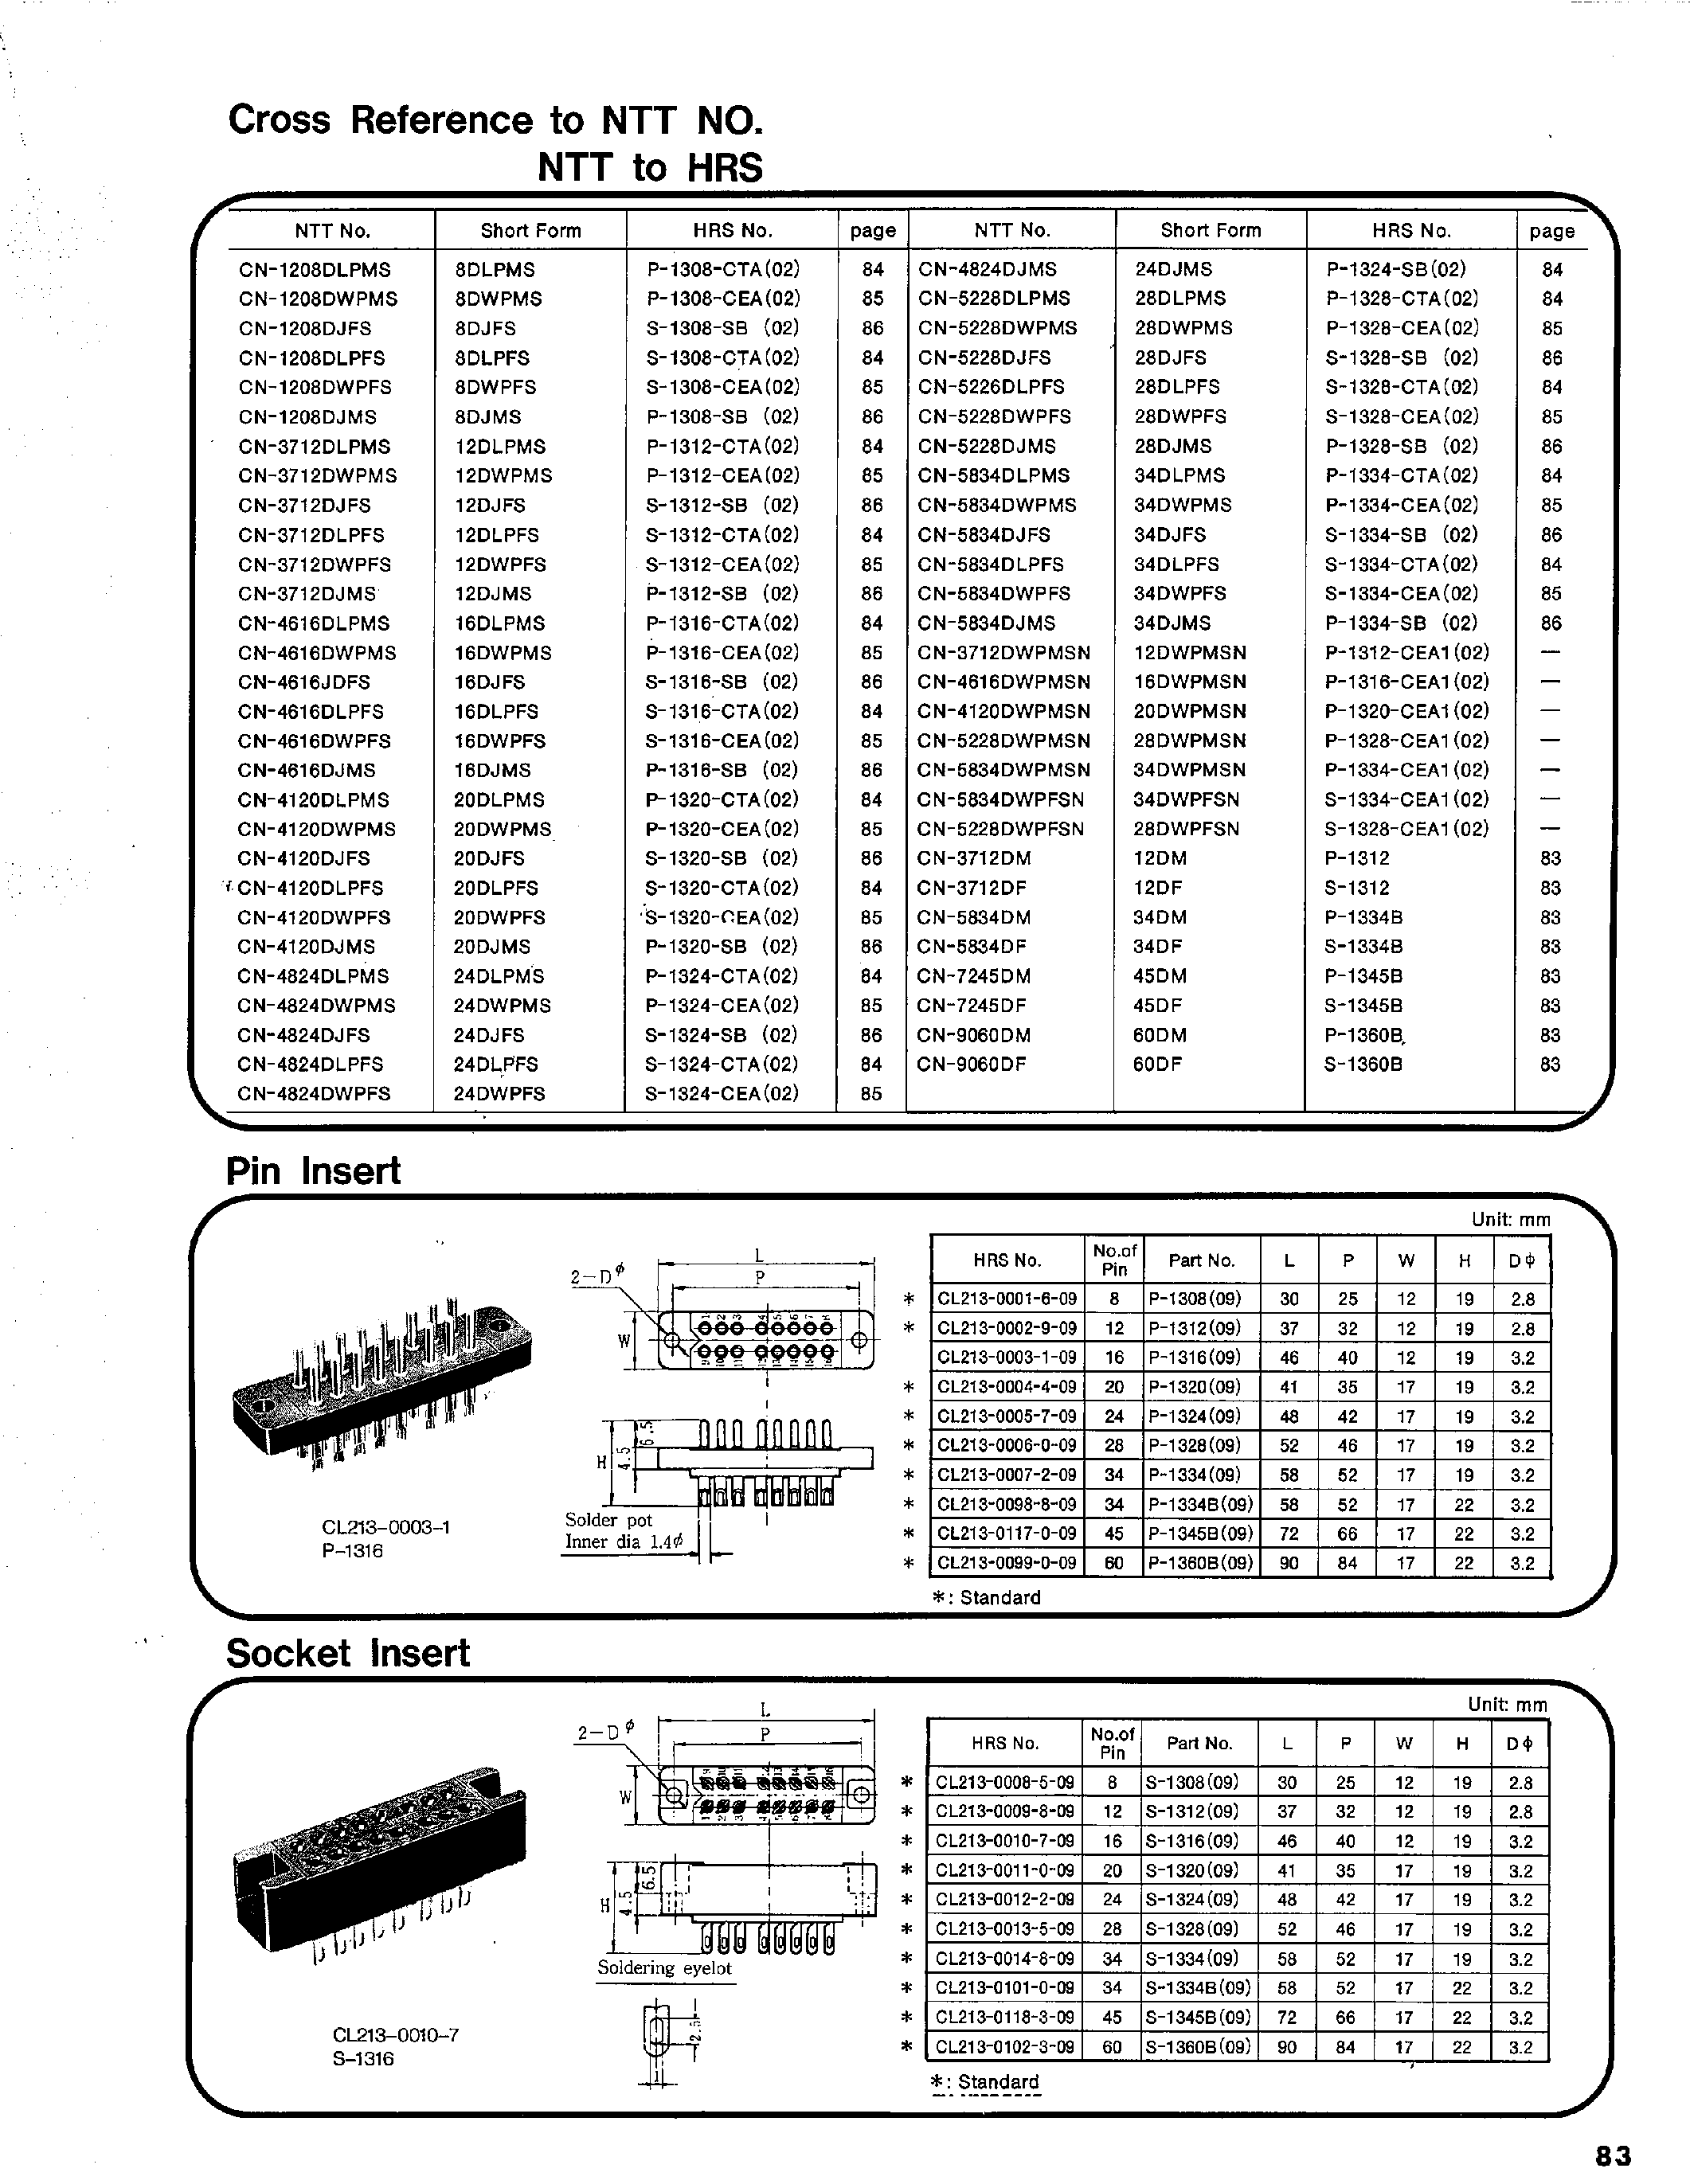 Datasheet P-138W-CE - 1300 SERIES RECTANGULAR CONNECTORS page 2